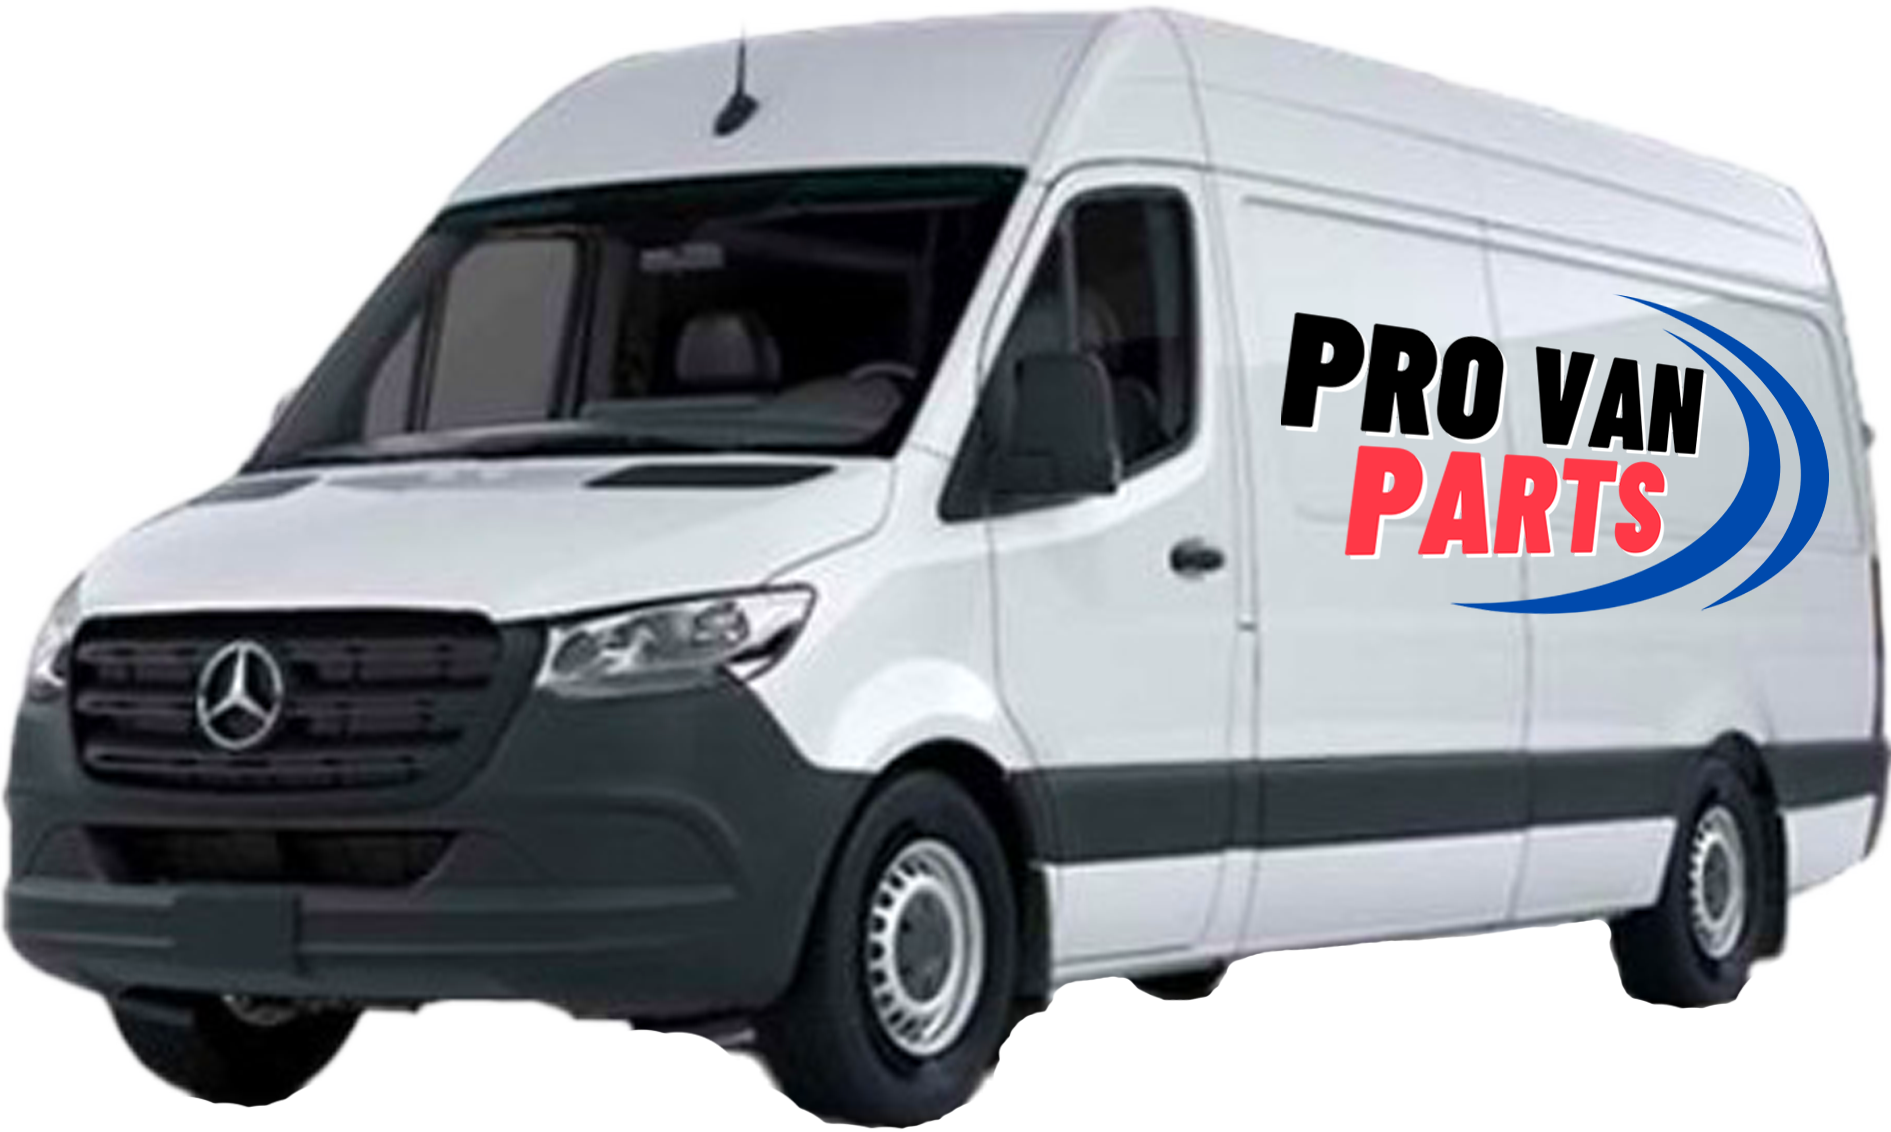 Sprinter logo #5 Pro Van Parts